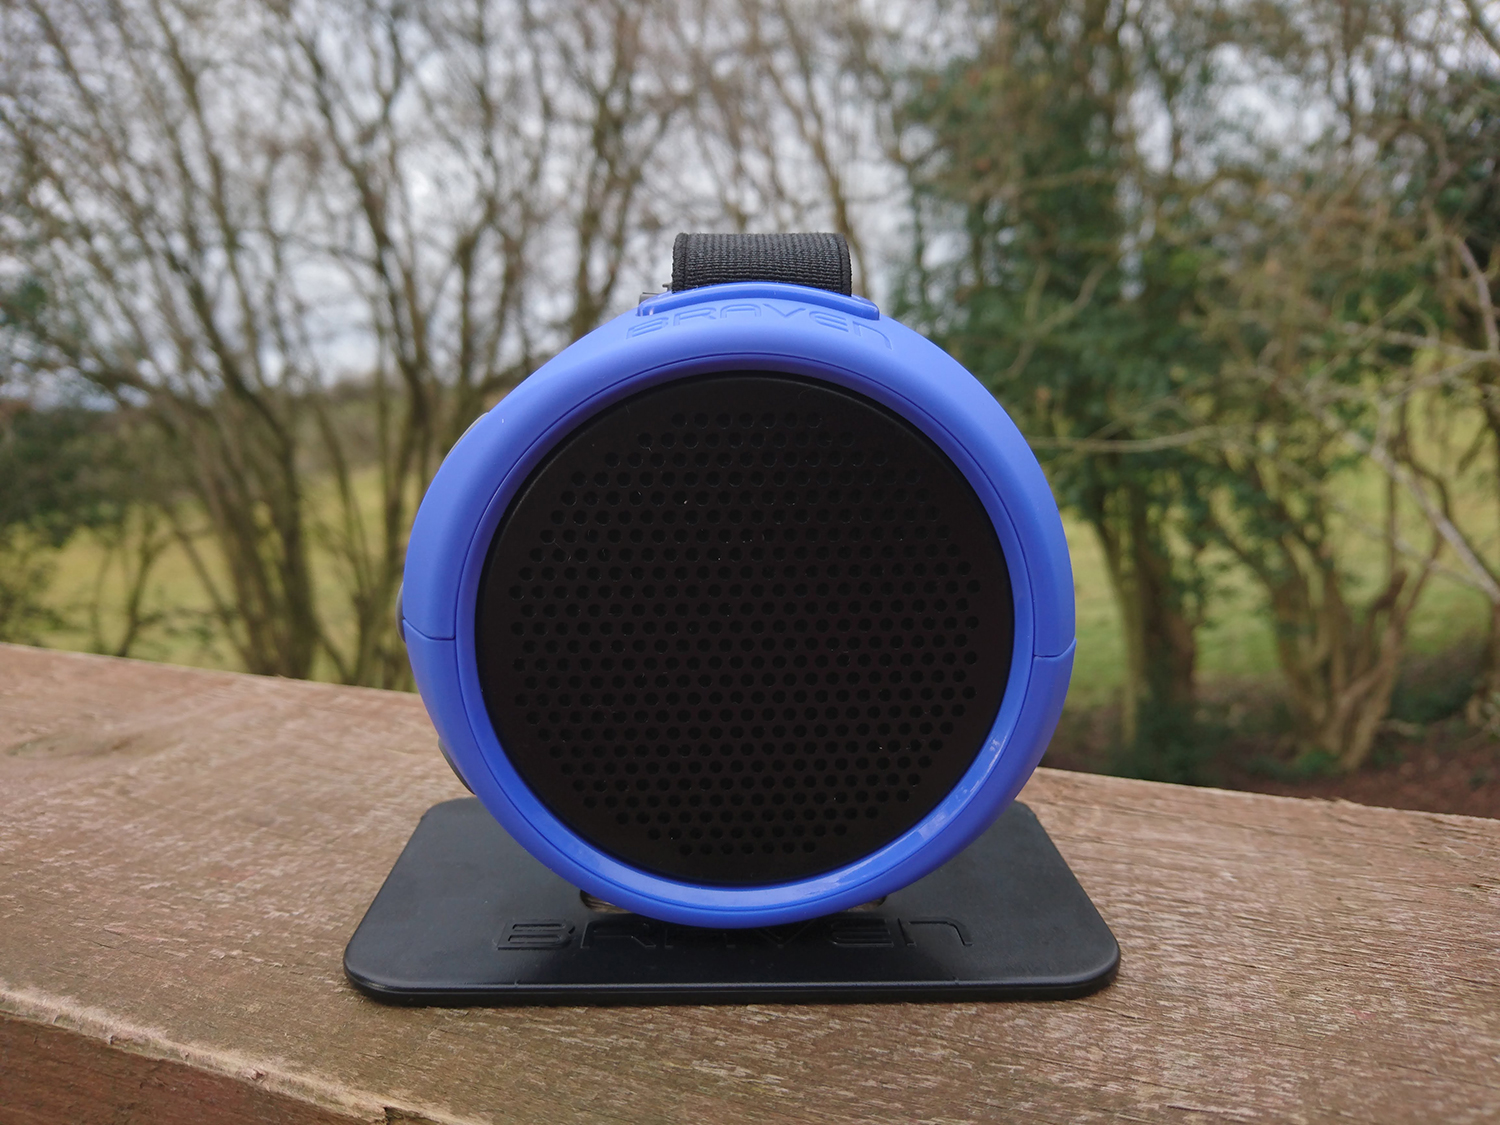 Braven 105 waterproof speaker